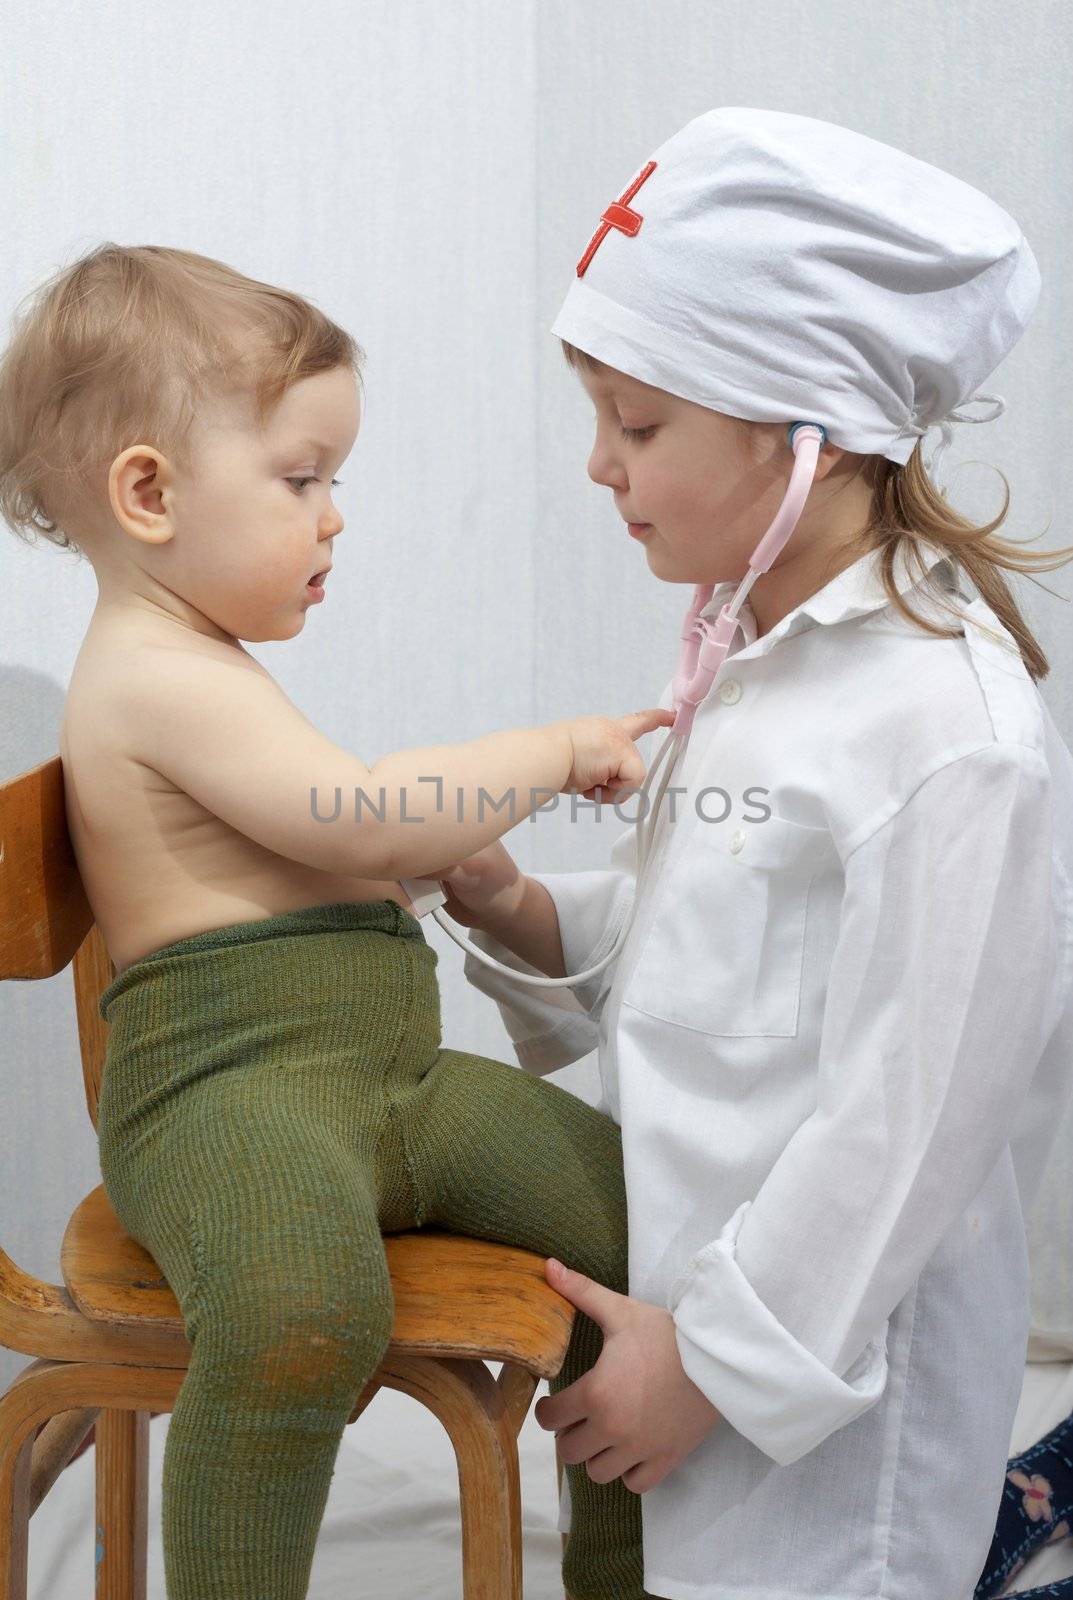 Girl and little baby by velkol